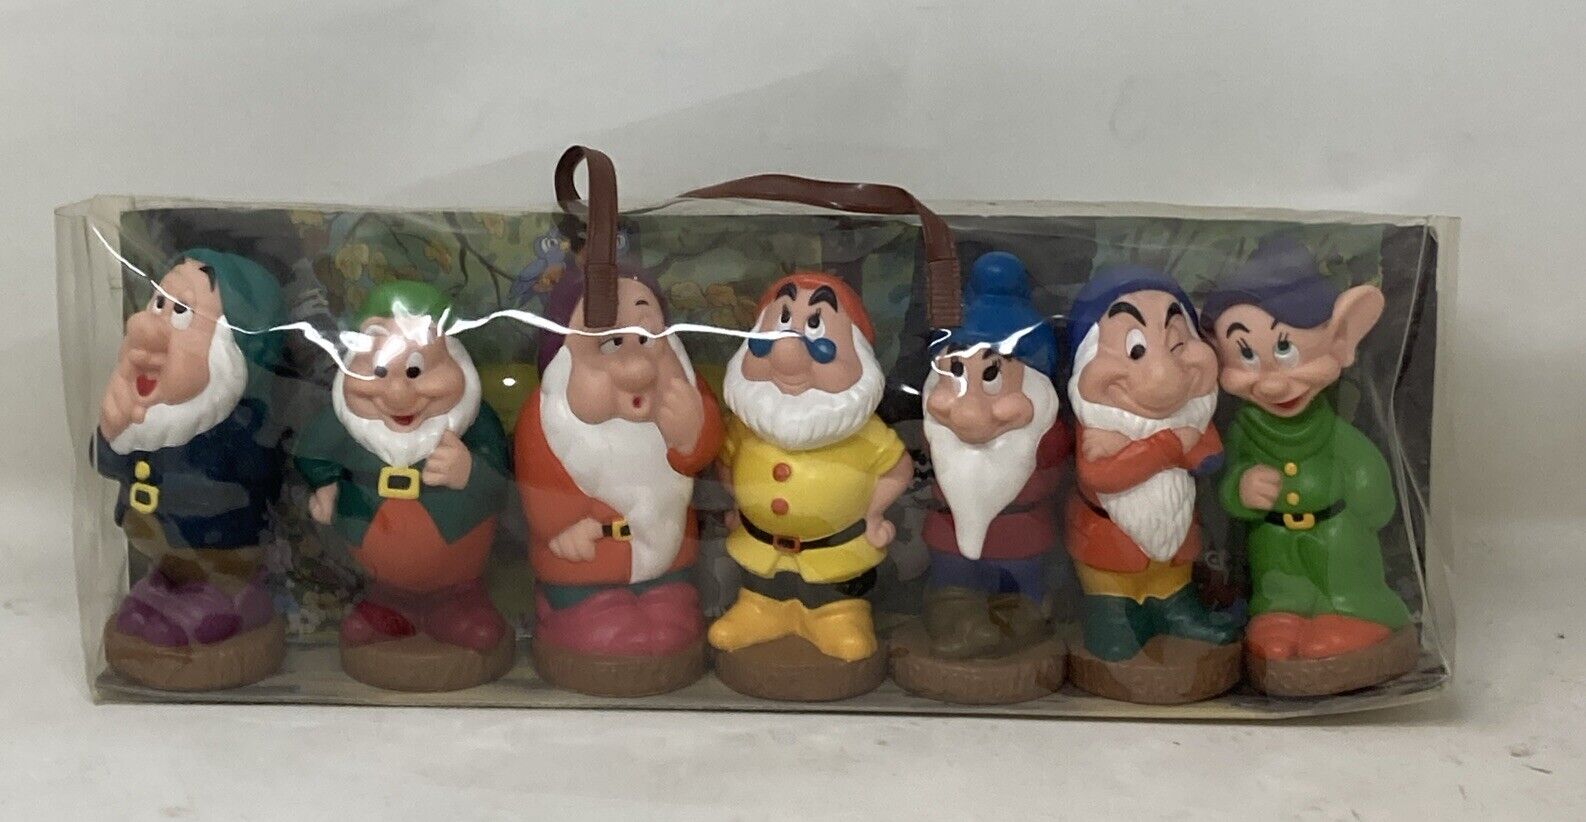 Vintage Disney Seven Dwarfs 5-6 inch vinyl plastic figures Toys set In Case NOS